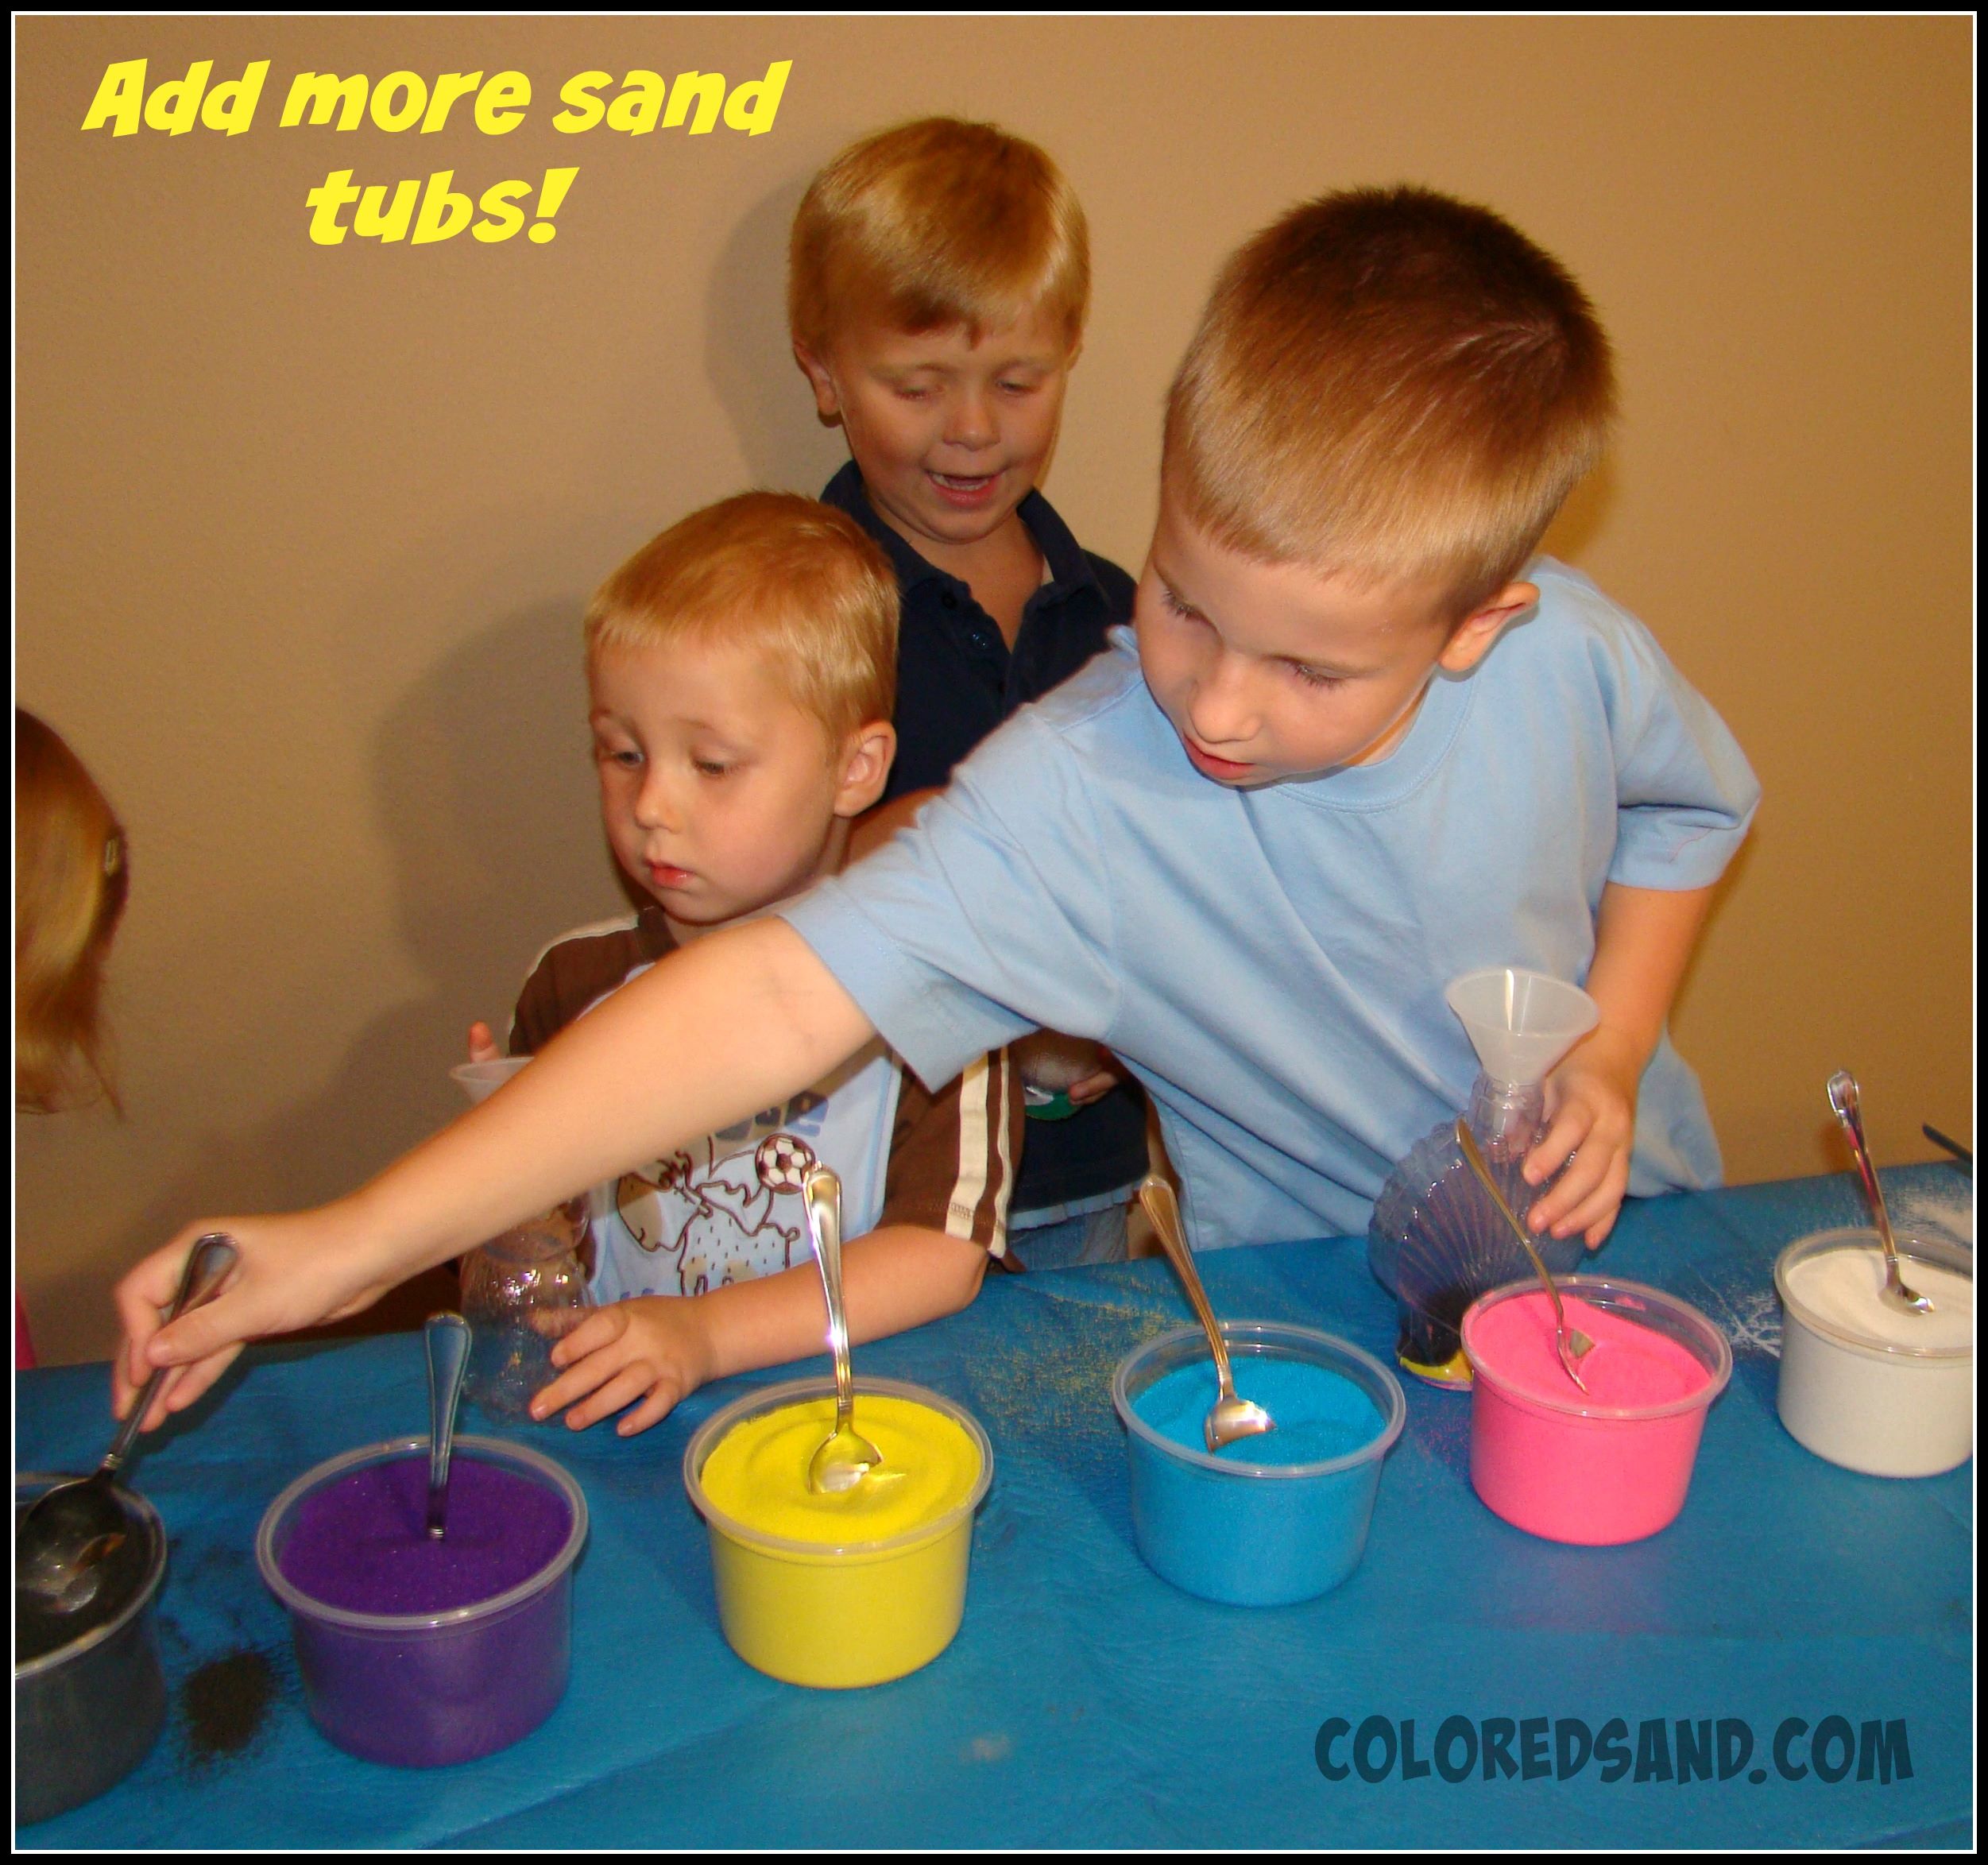 supplies for doing sand art